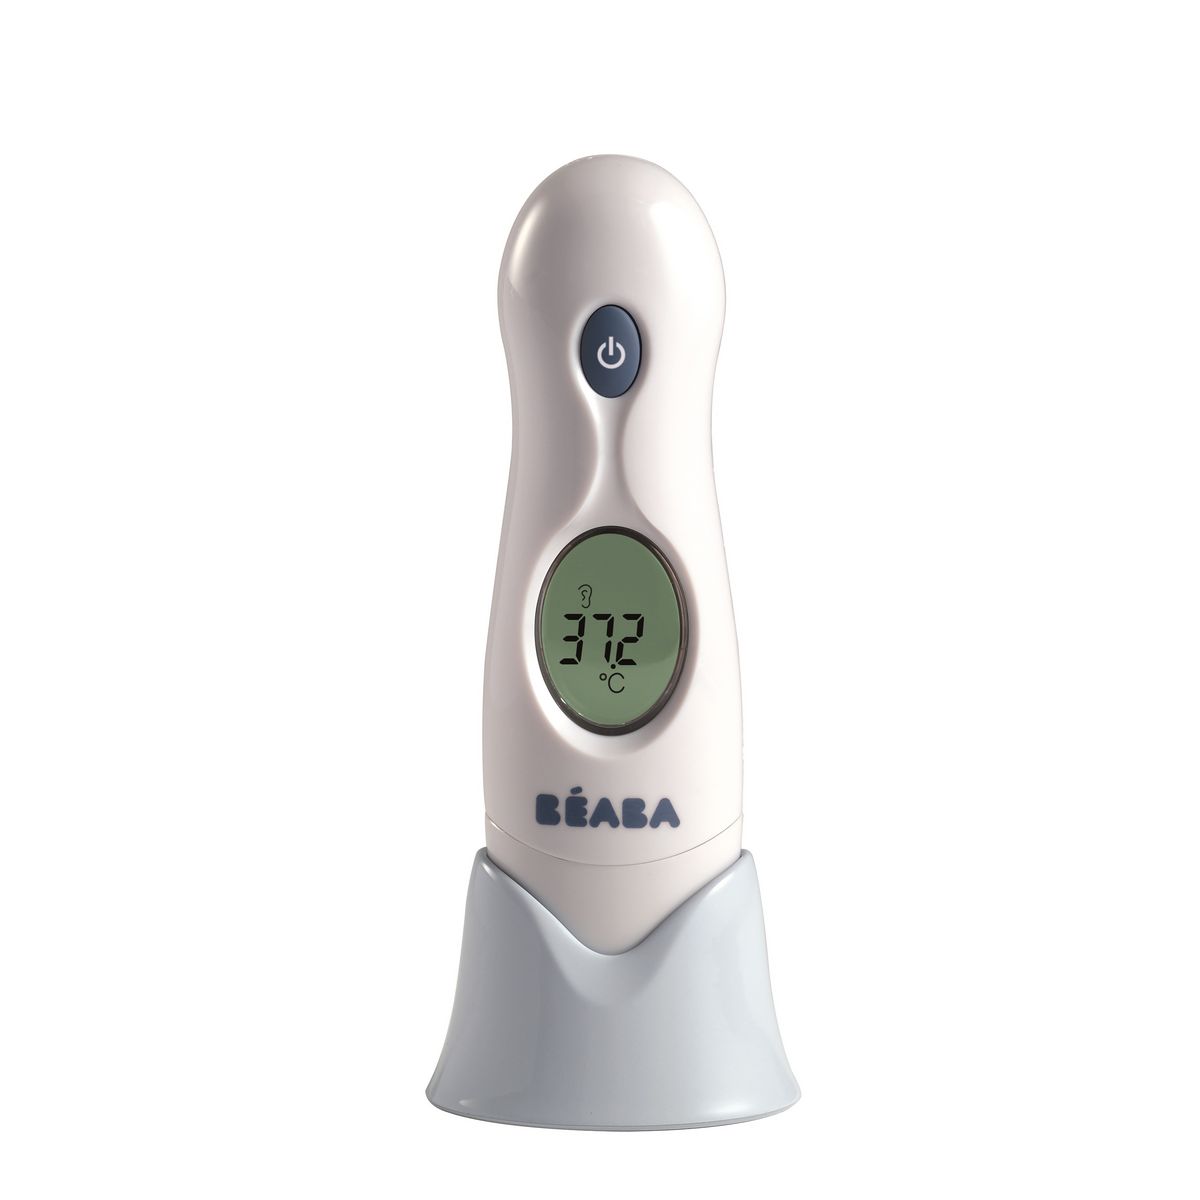 BEABA Thermomètre 4 en 1 infrarouge ''Exacto'' - Blanc pas cher 